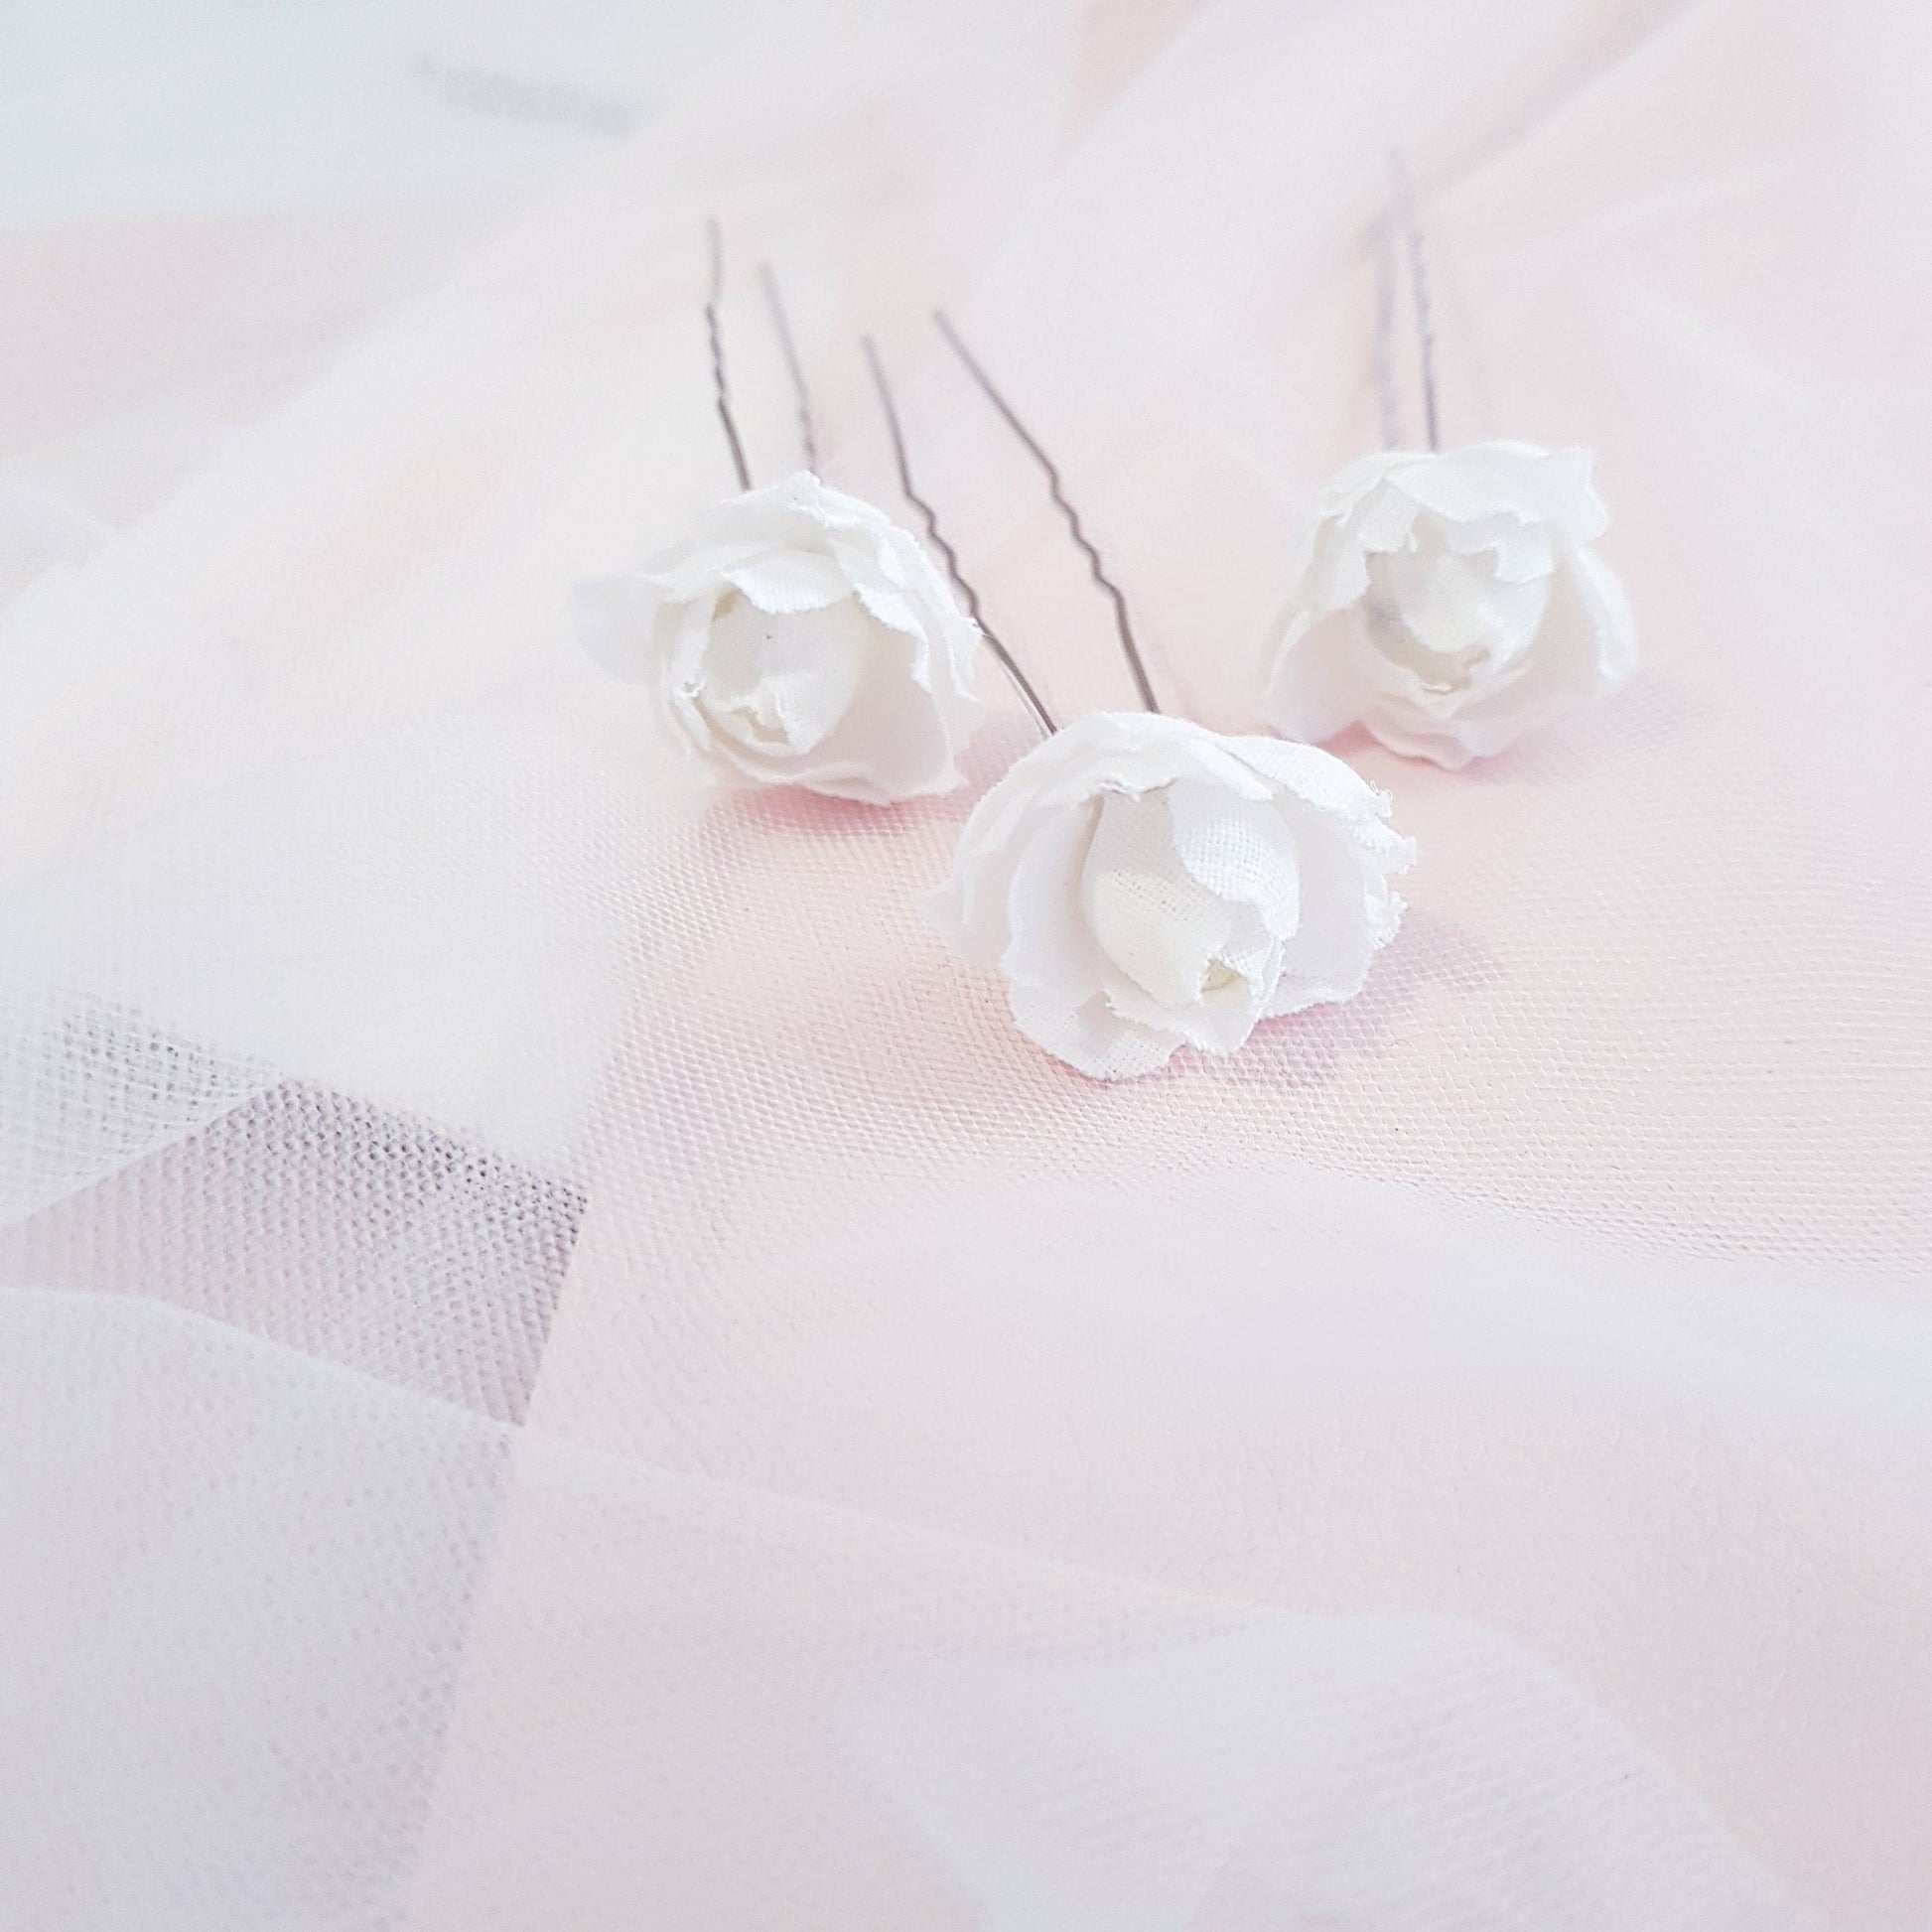 LA ROSE Set of Hair U pins off white small flower floral hairpins Australia wedding bridal bridesmaids hair accessory silk cotton flowers